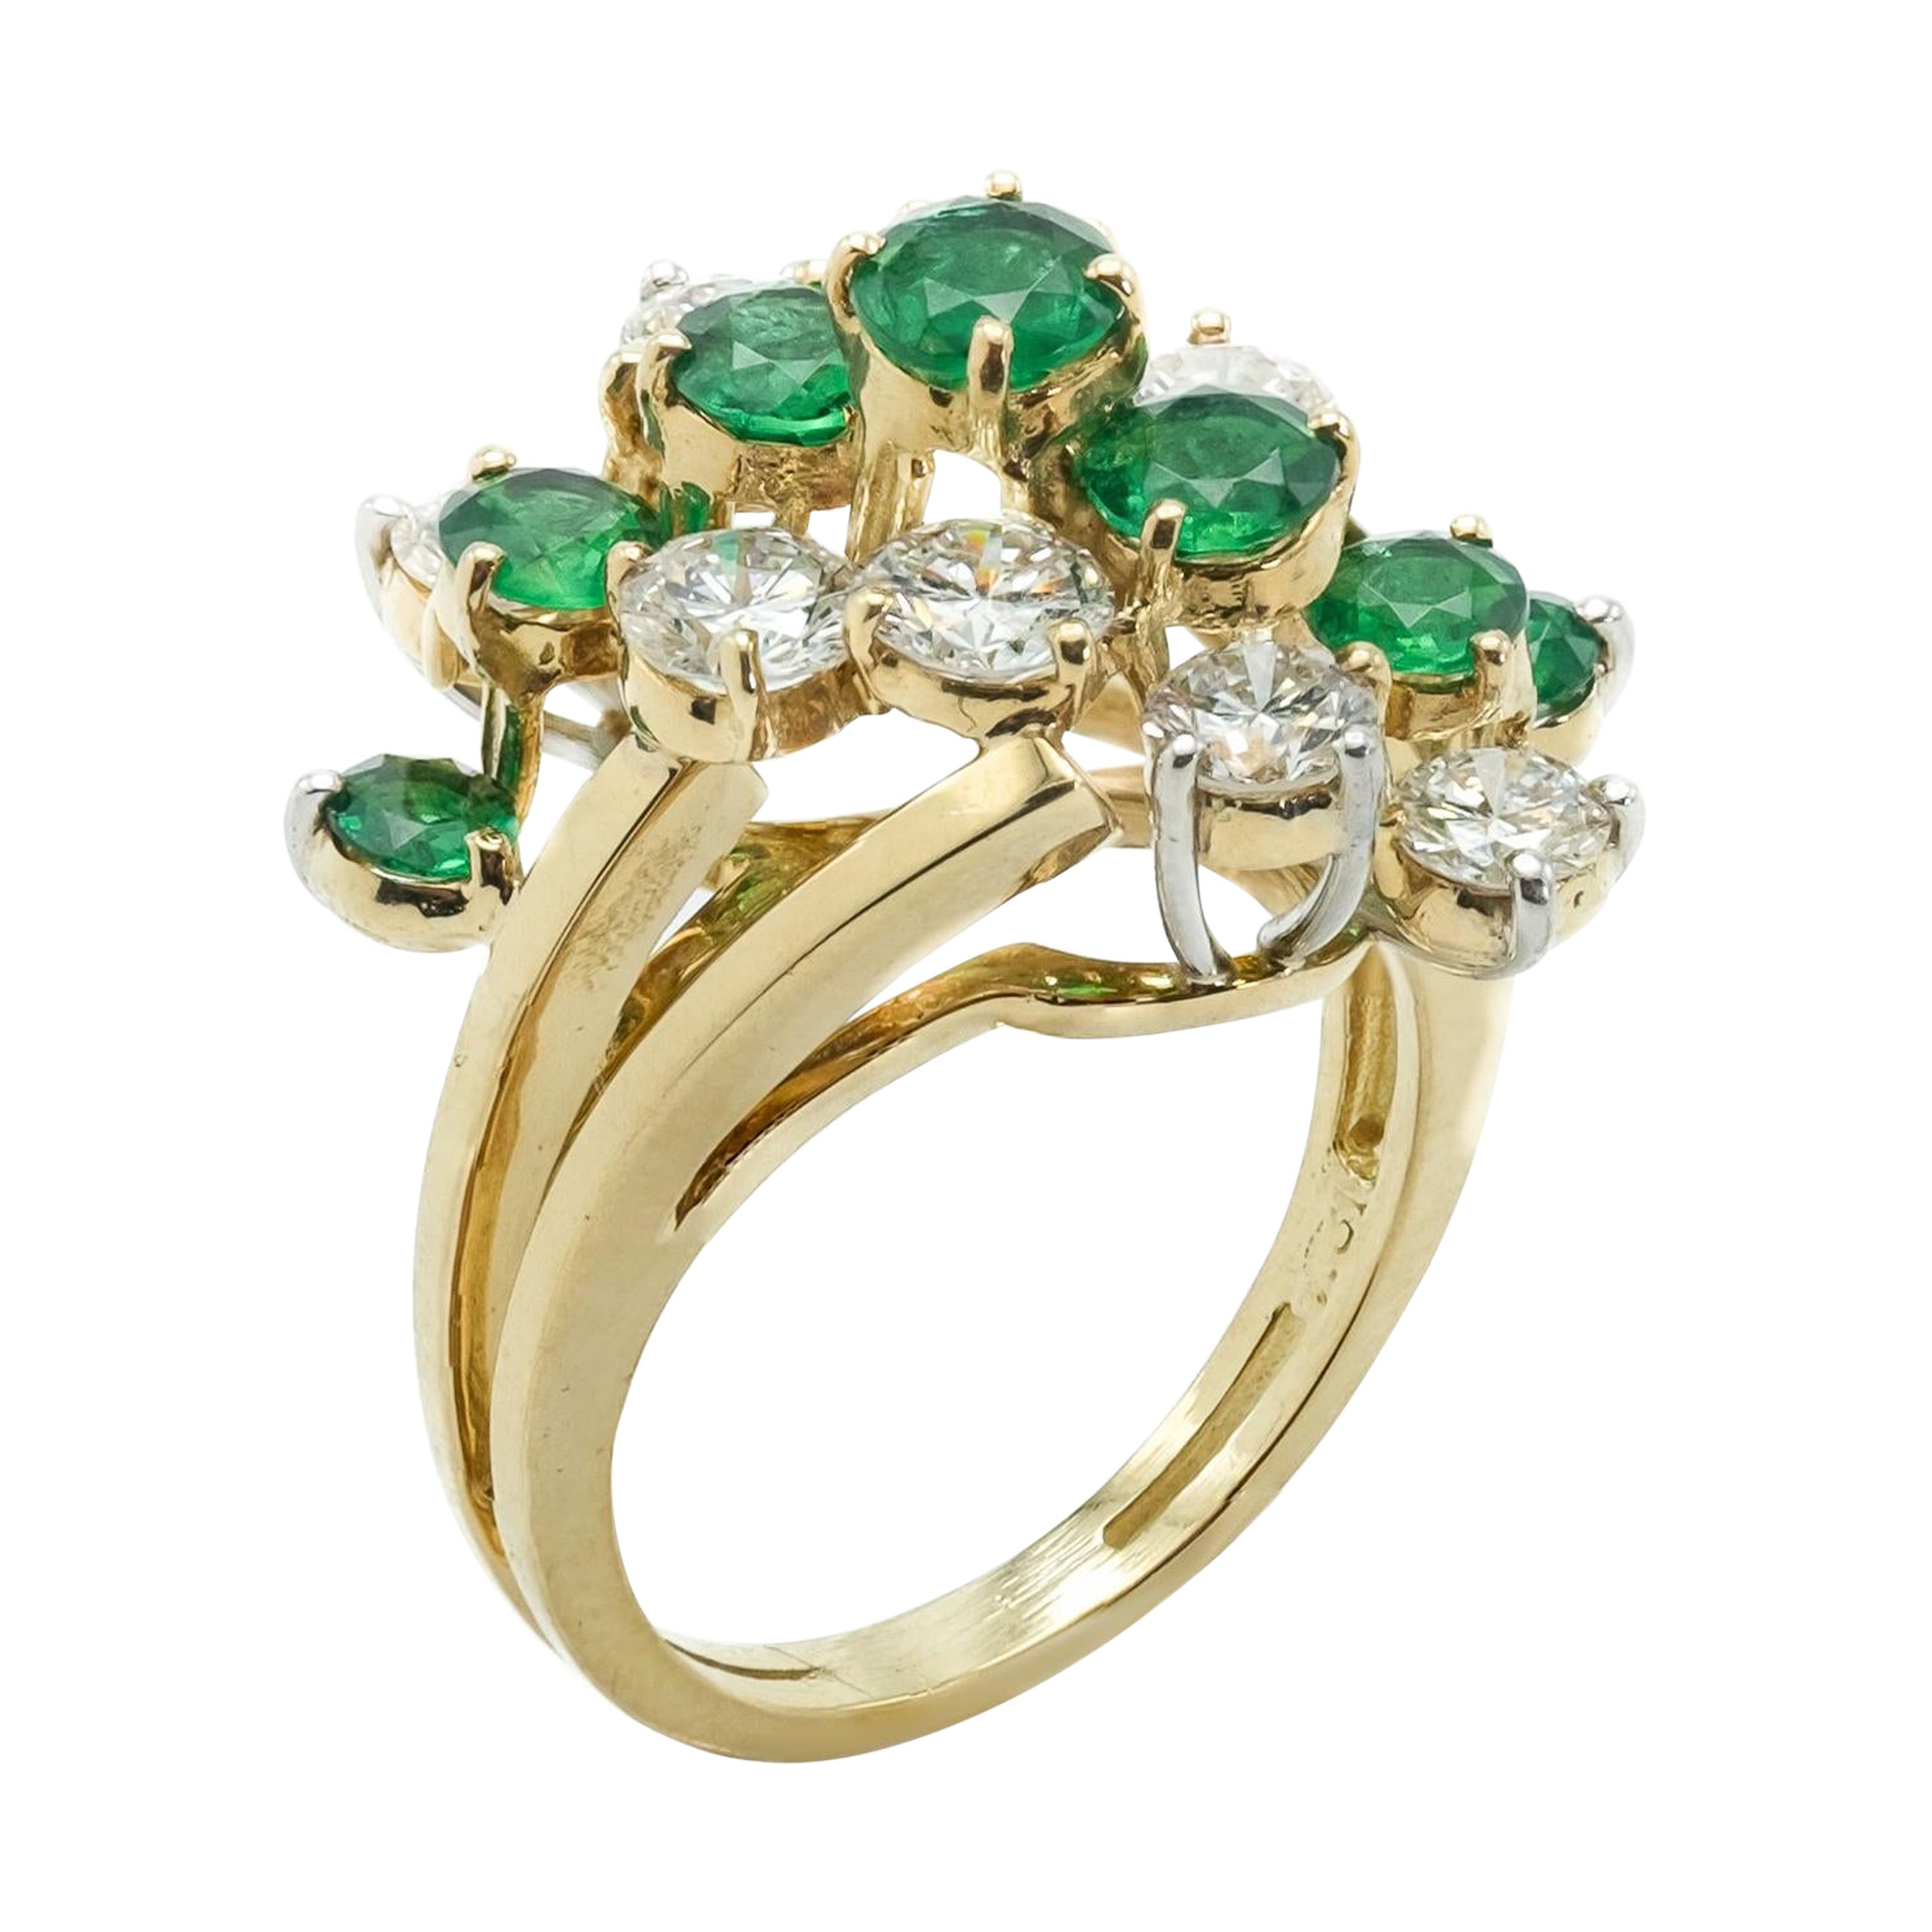 Moderist 18 Karat Kurt Wayne Ring with Emeralds and Diamonds For Sale